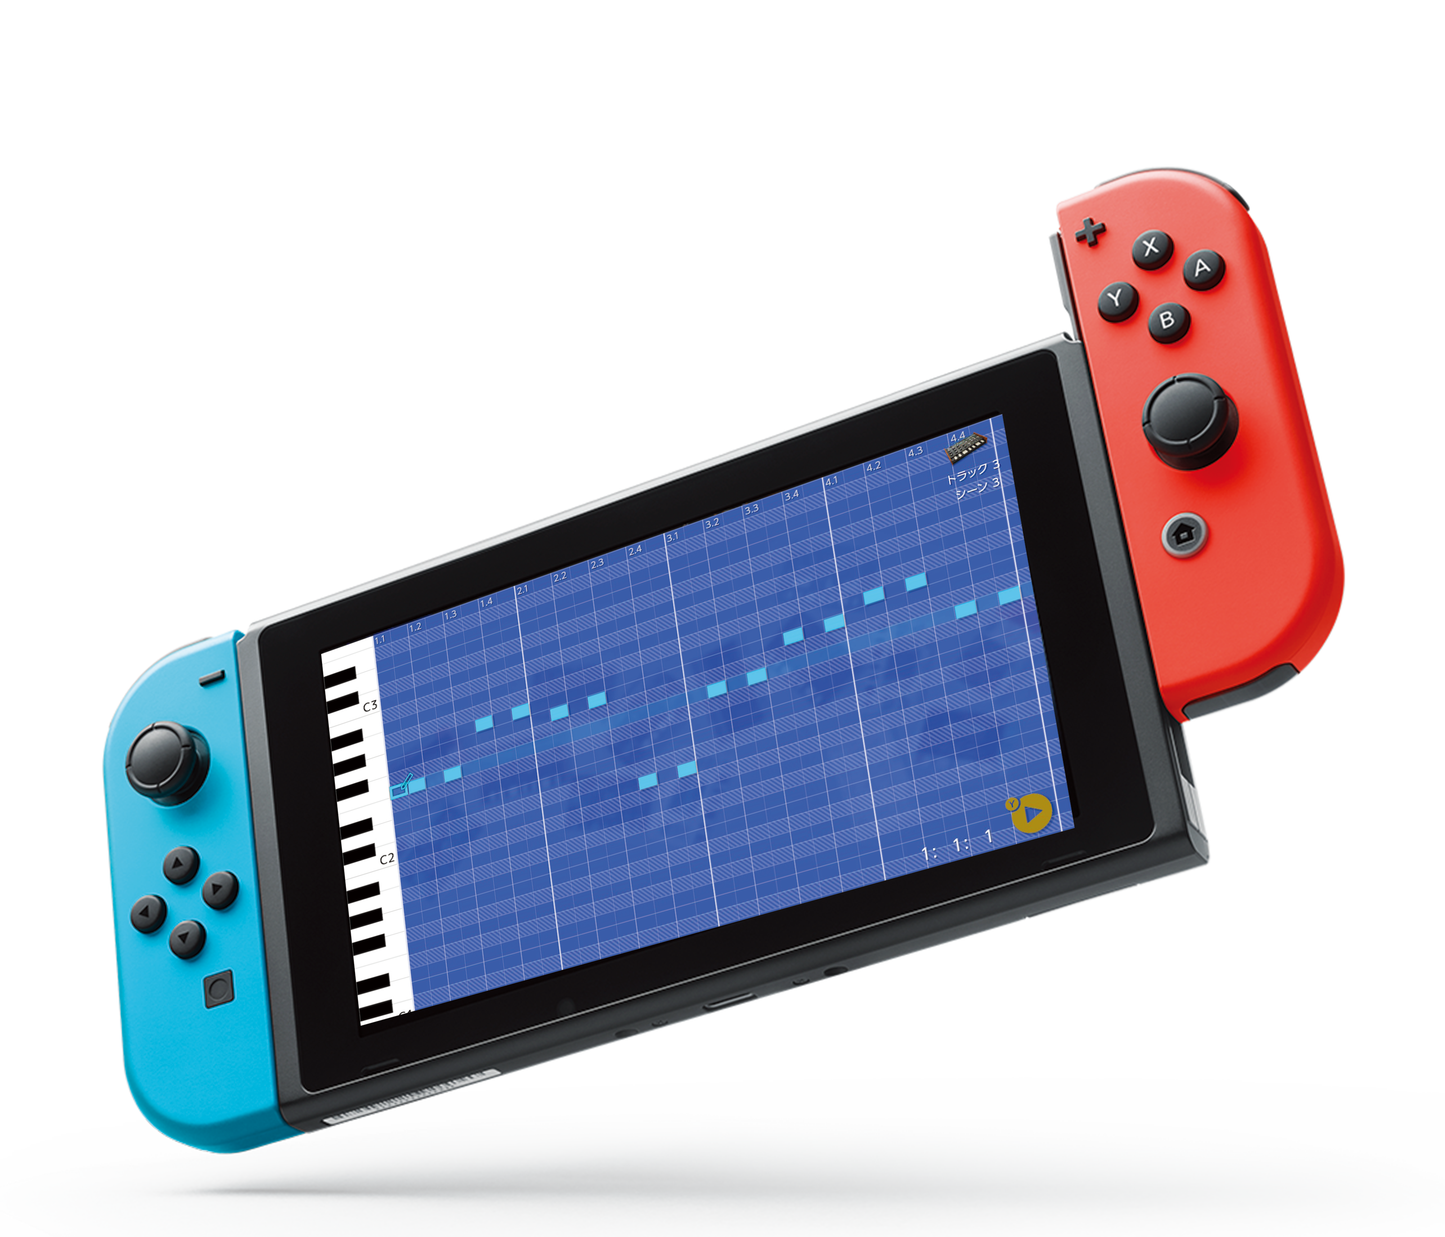 KORG Gadget for Nintendo Switch パッケージ版